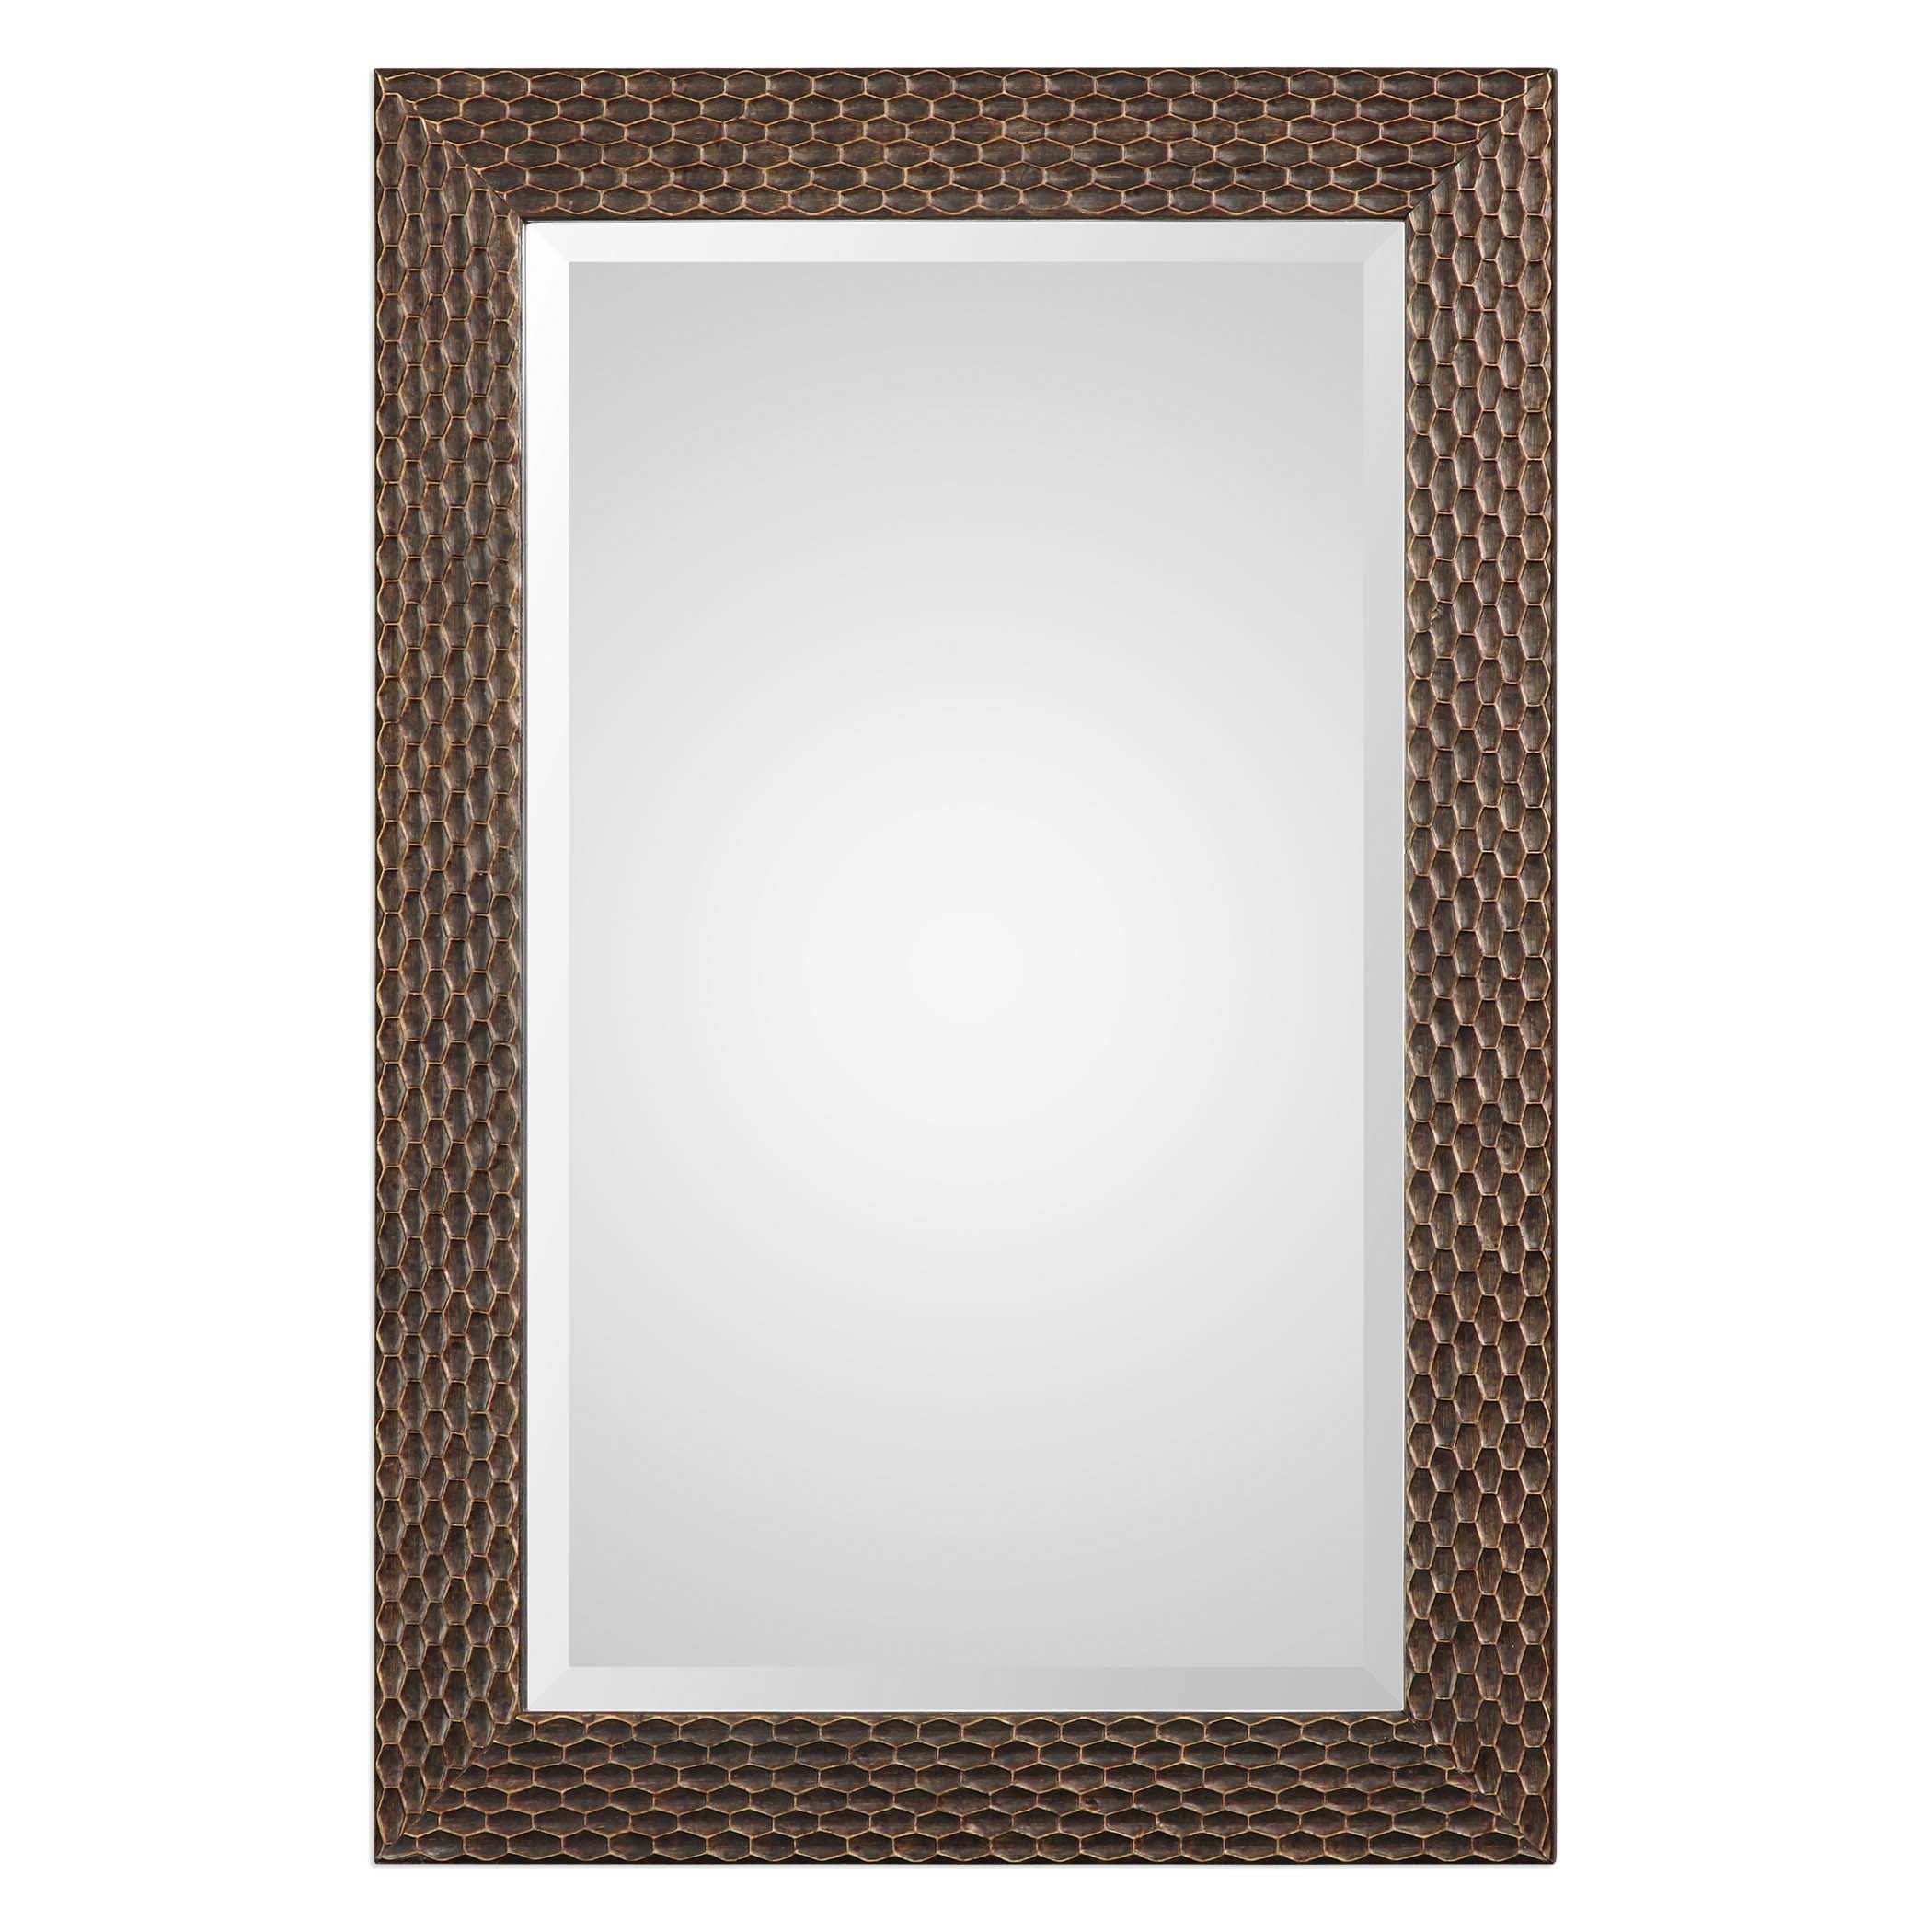 Decor Market Mirror - Rust Bronze With Gold Highlights